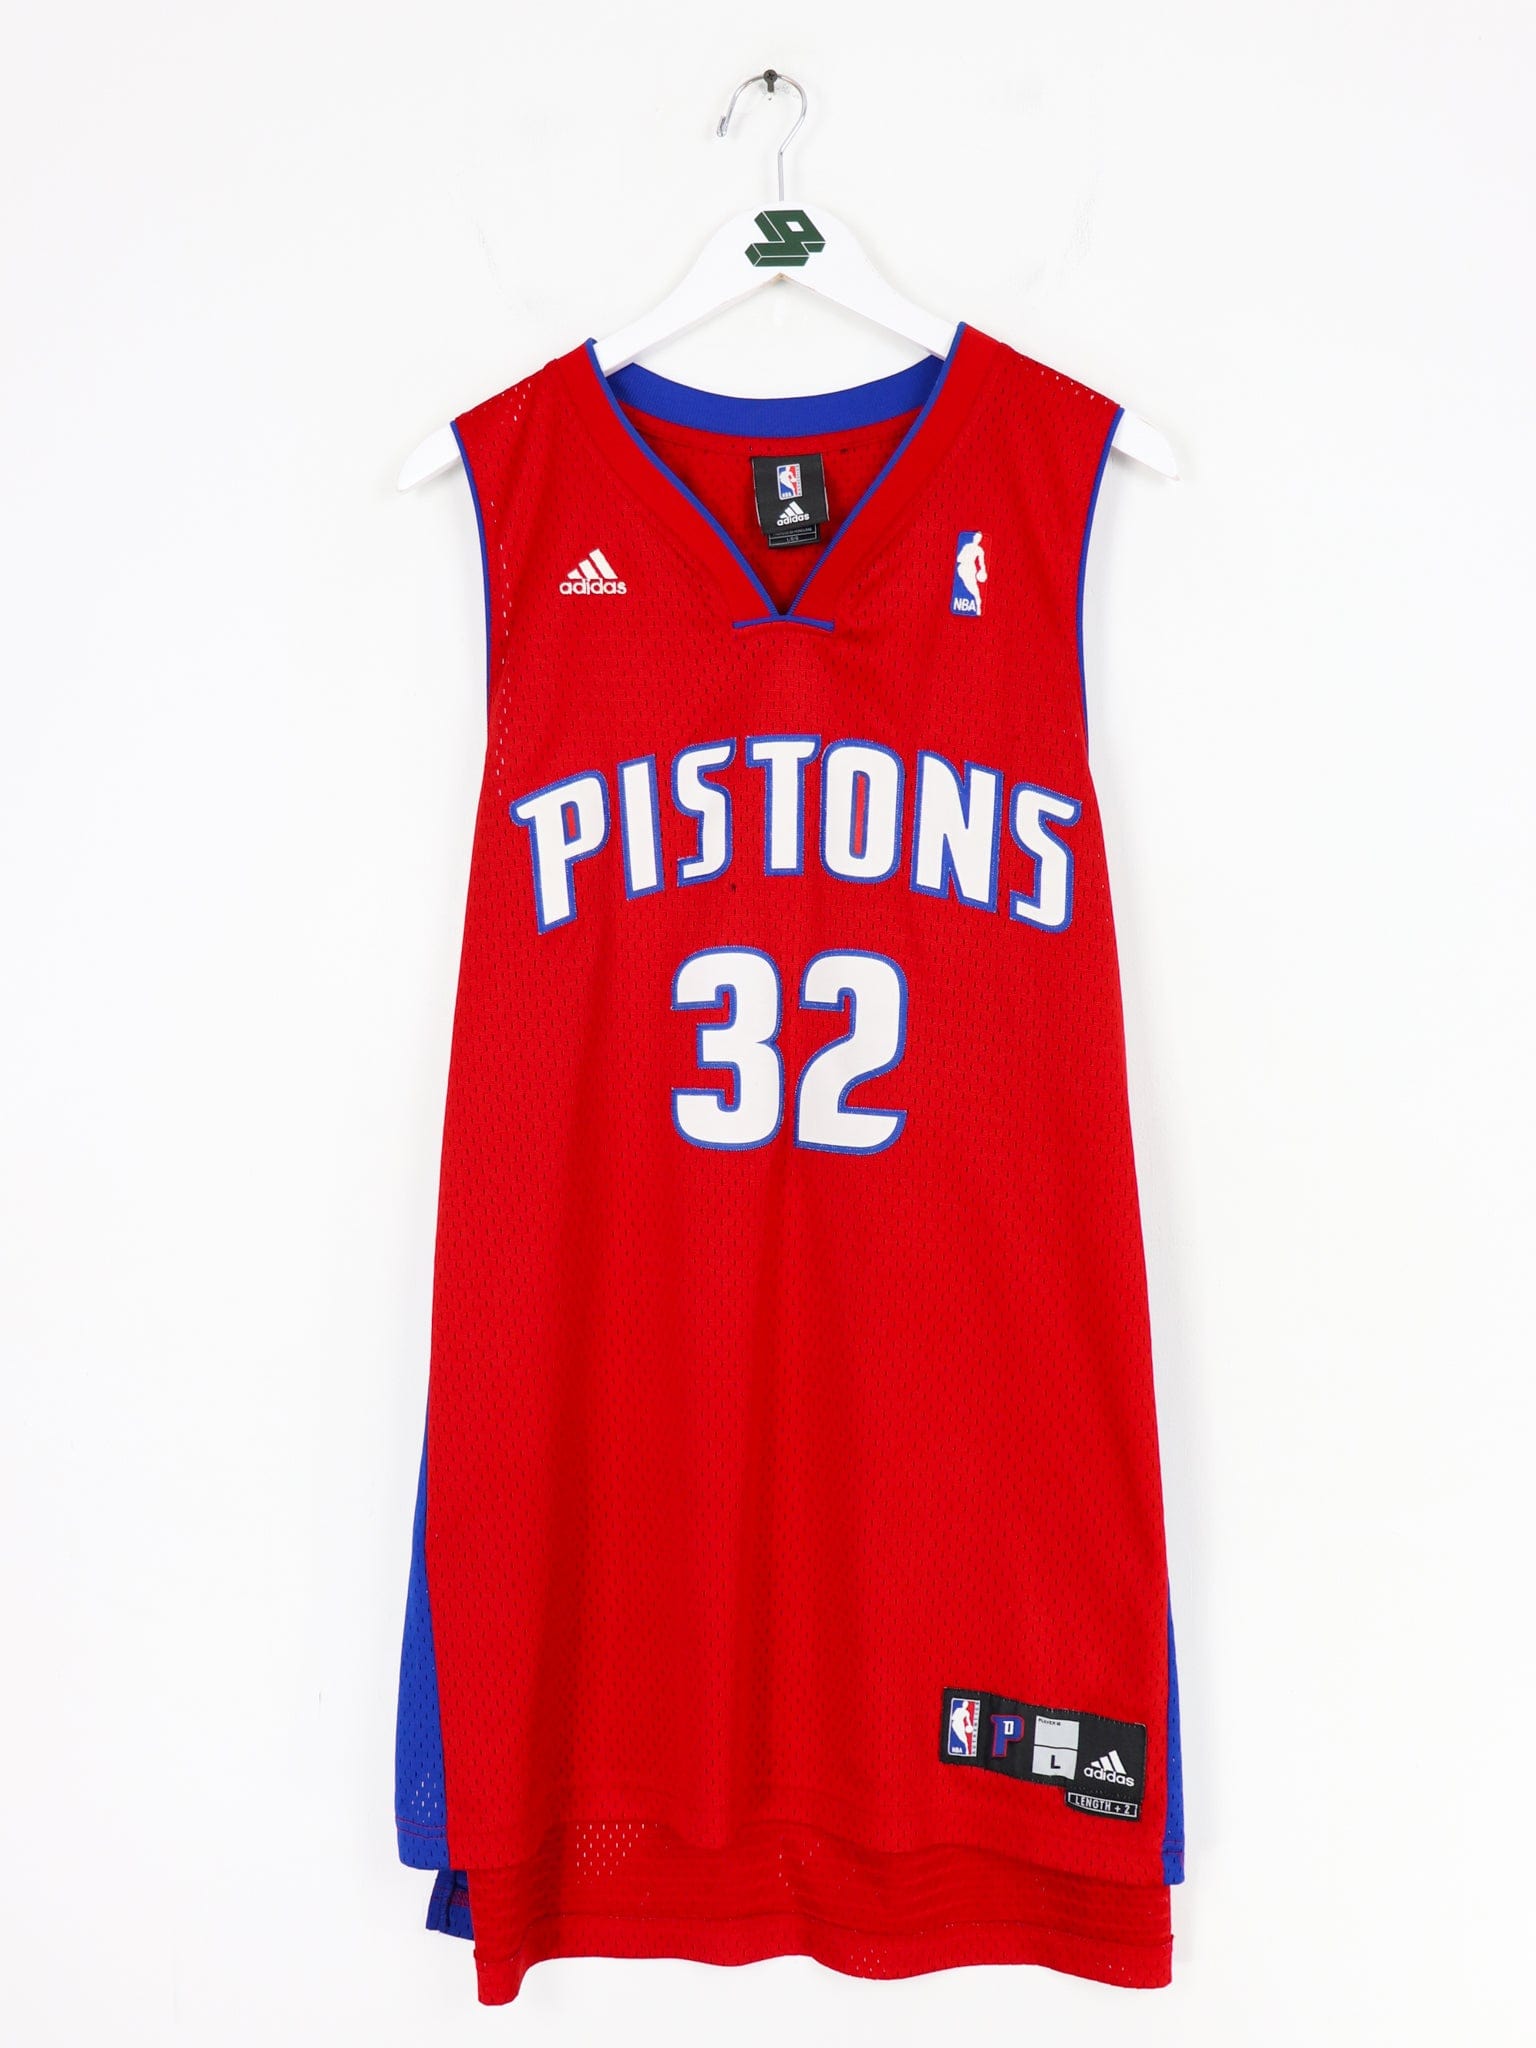 Detroit Pistons NBA Authentic Nike Vintage Shooting Shirt XL